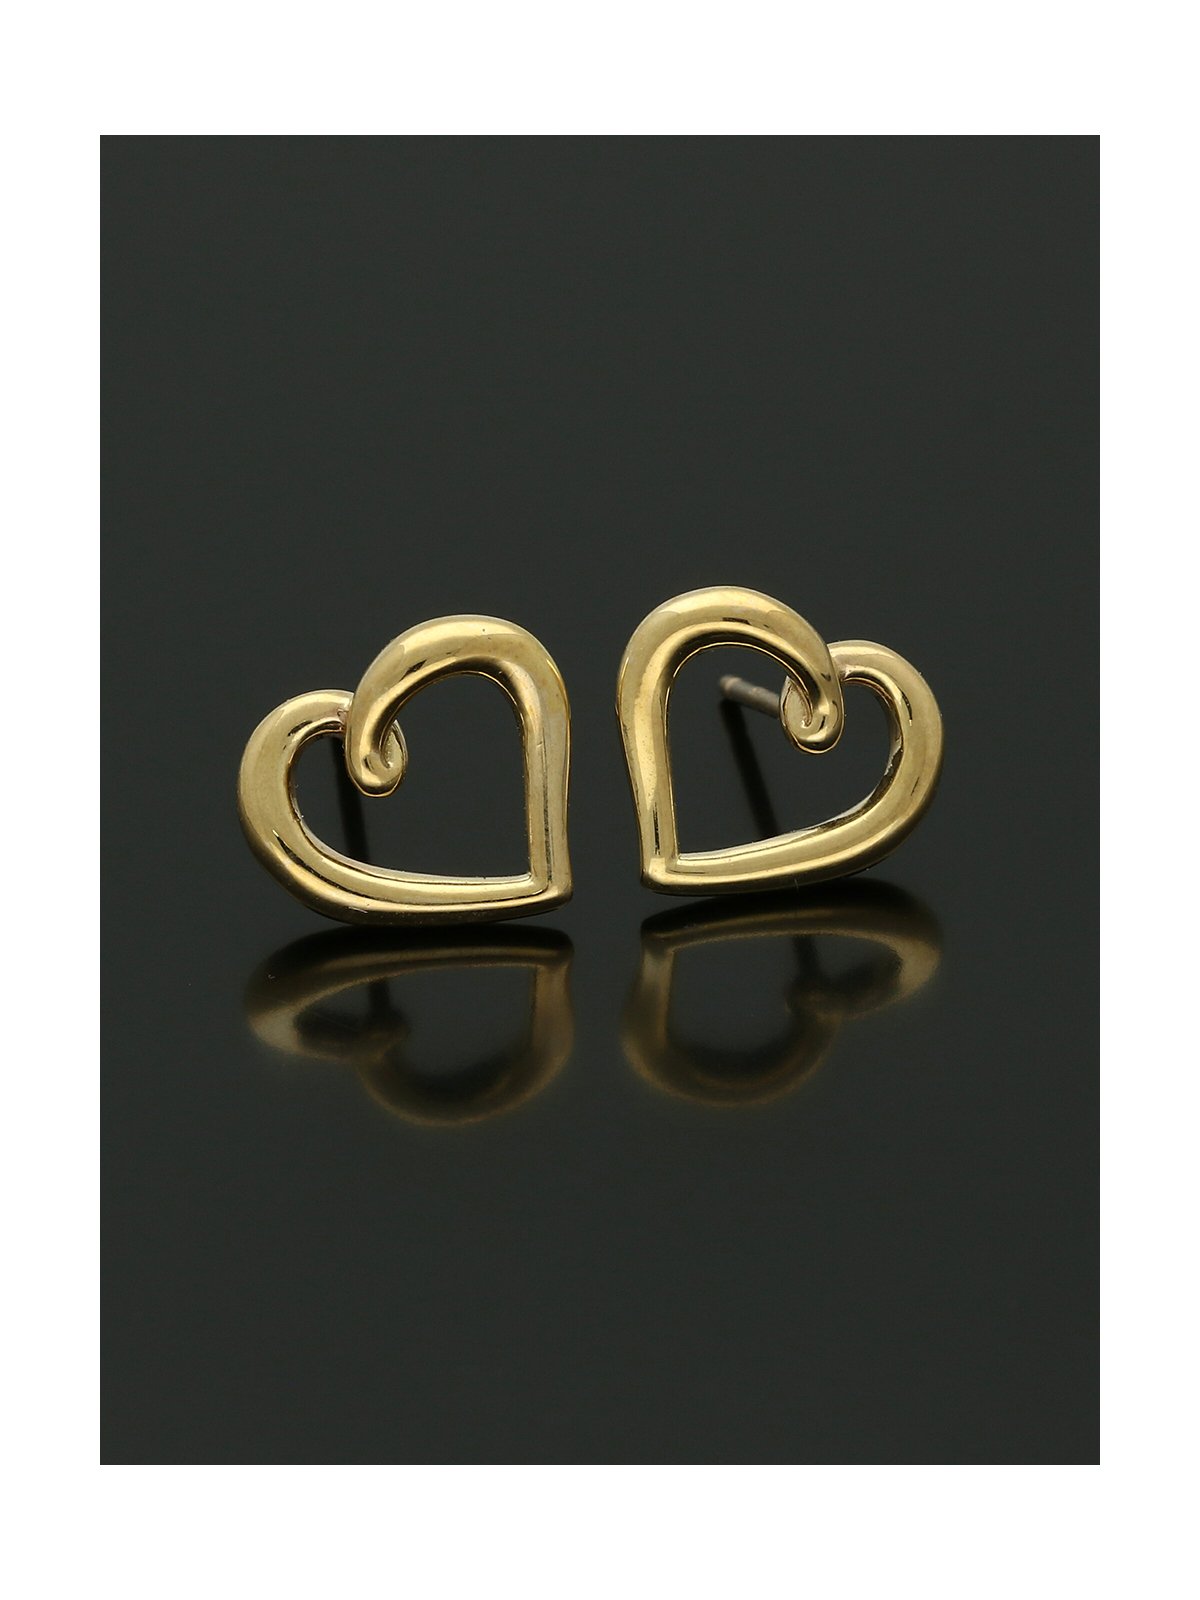 Organic Heart Stud Earrings 9mm in 9ct Yellow Gold